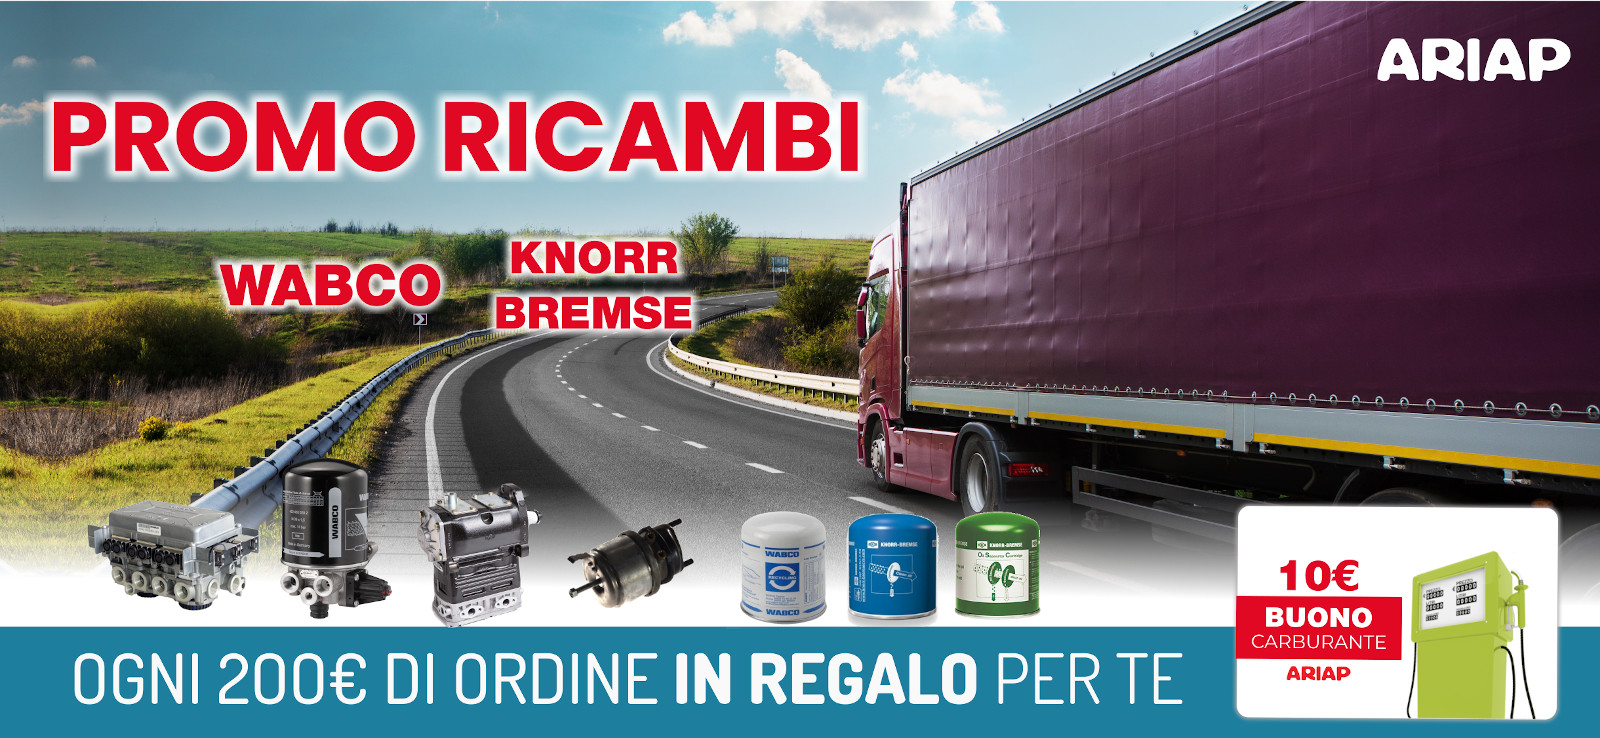 Promo ricambi Wabco e Knorr Bremse - Ariap ricambi trucks